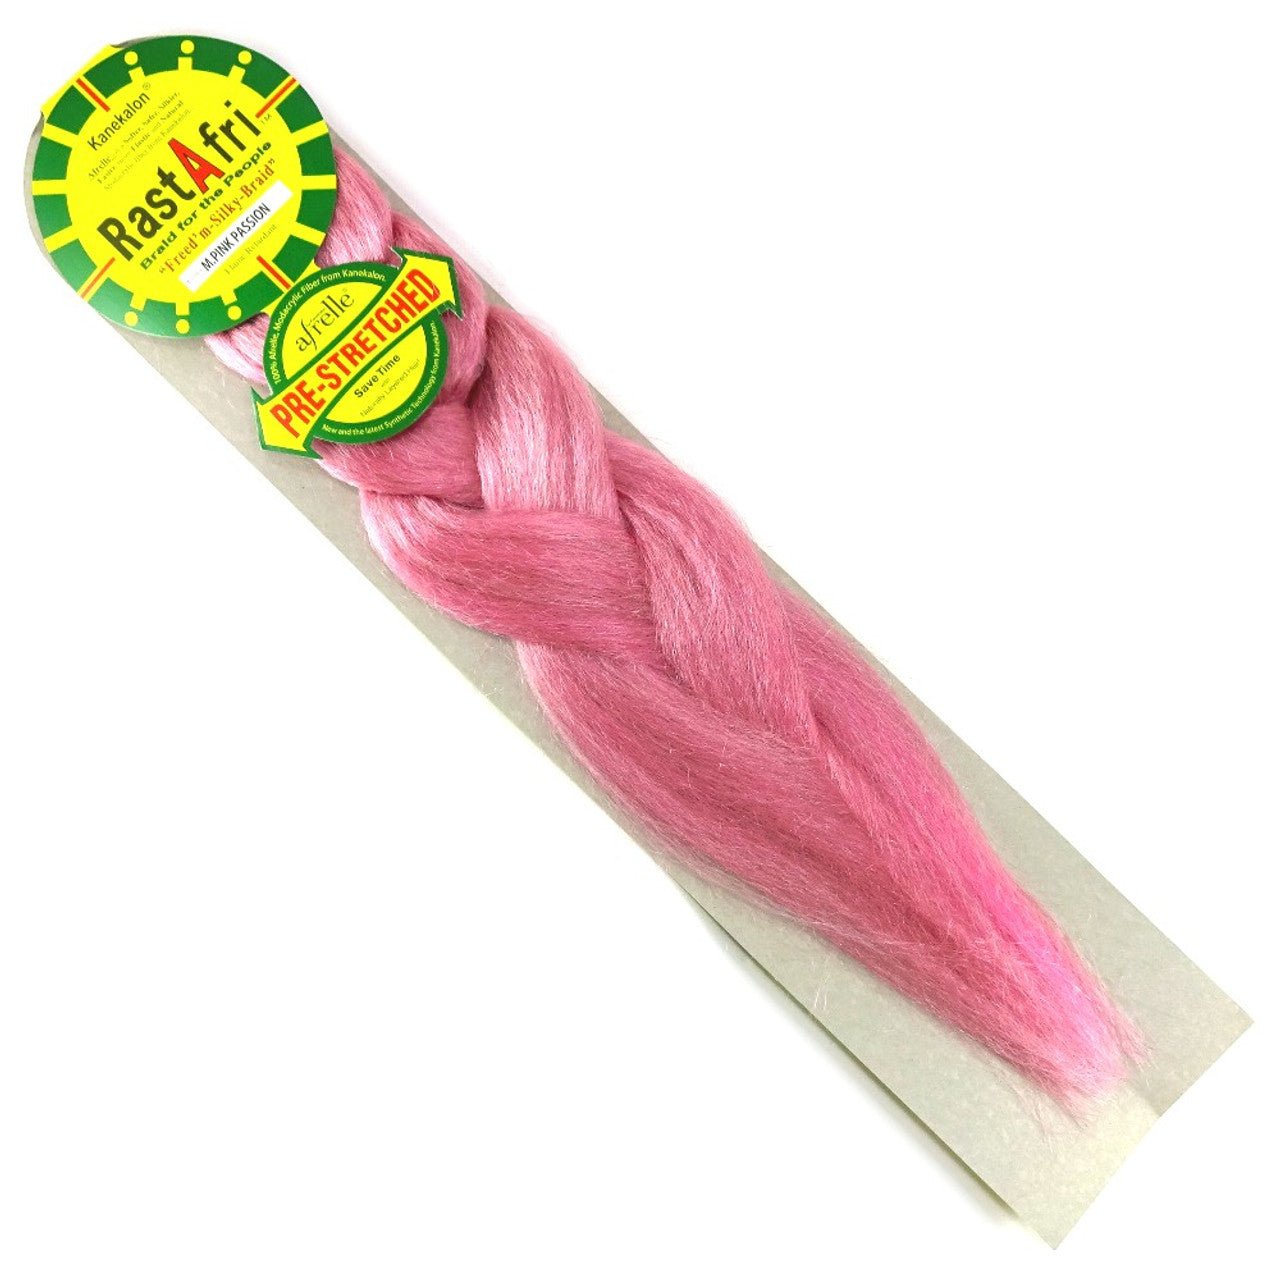 1 - Braid Weave M. Pink Passion - DaizyKat Cosmetics 1 - Braid Weave M. Pink Passion Rastafri Wig